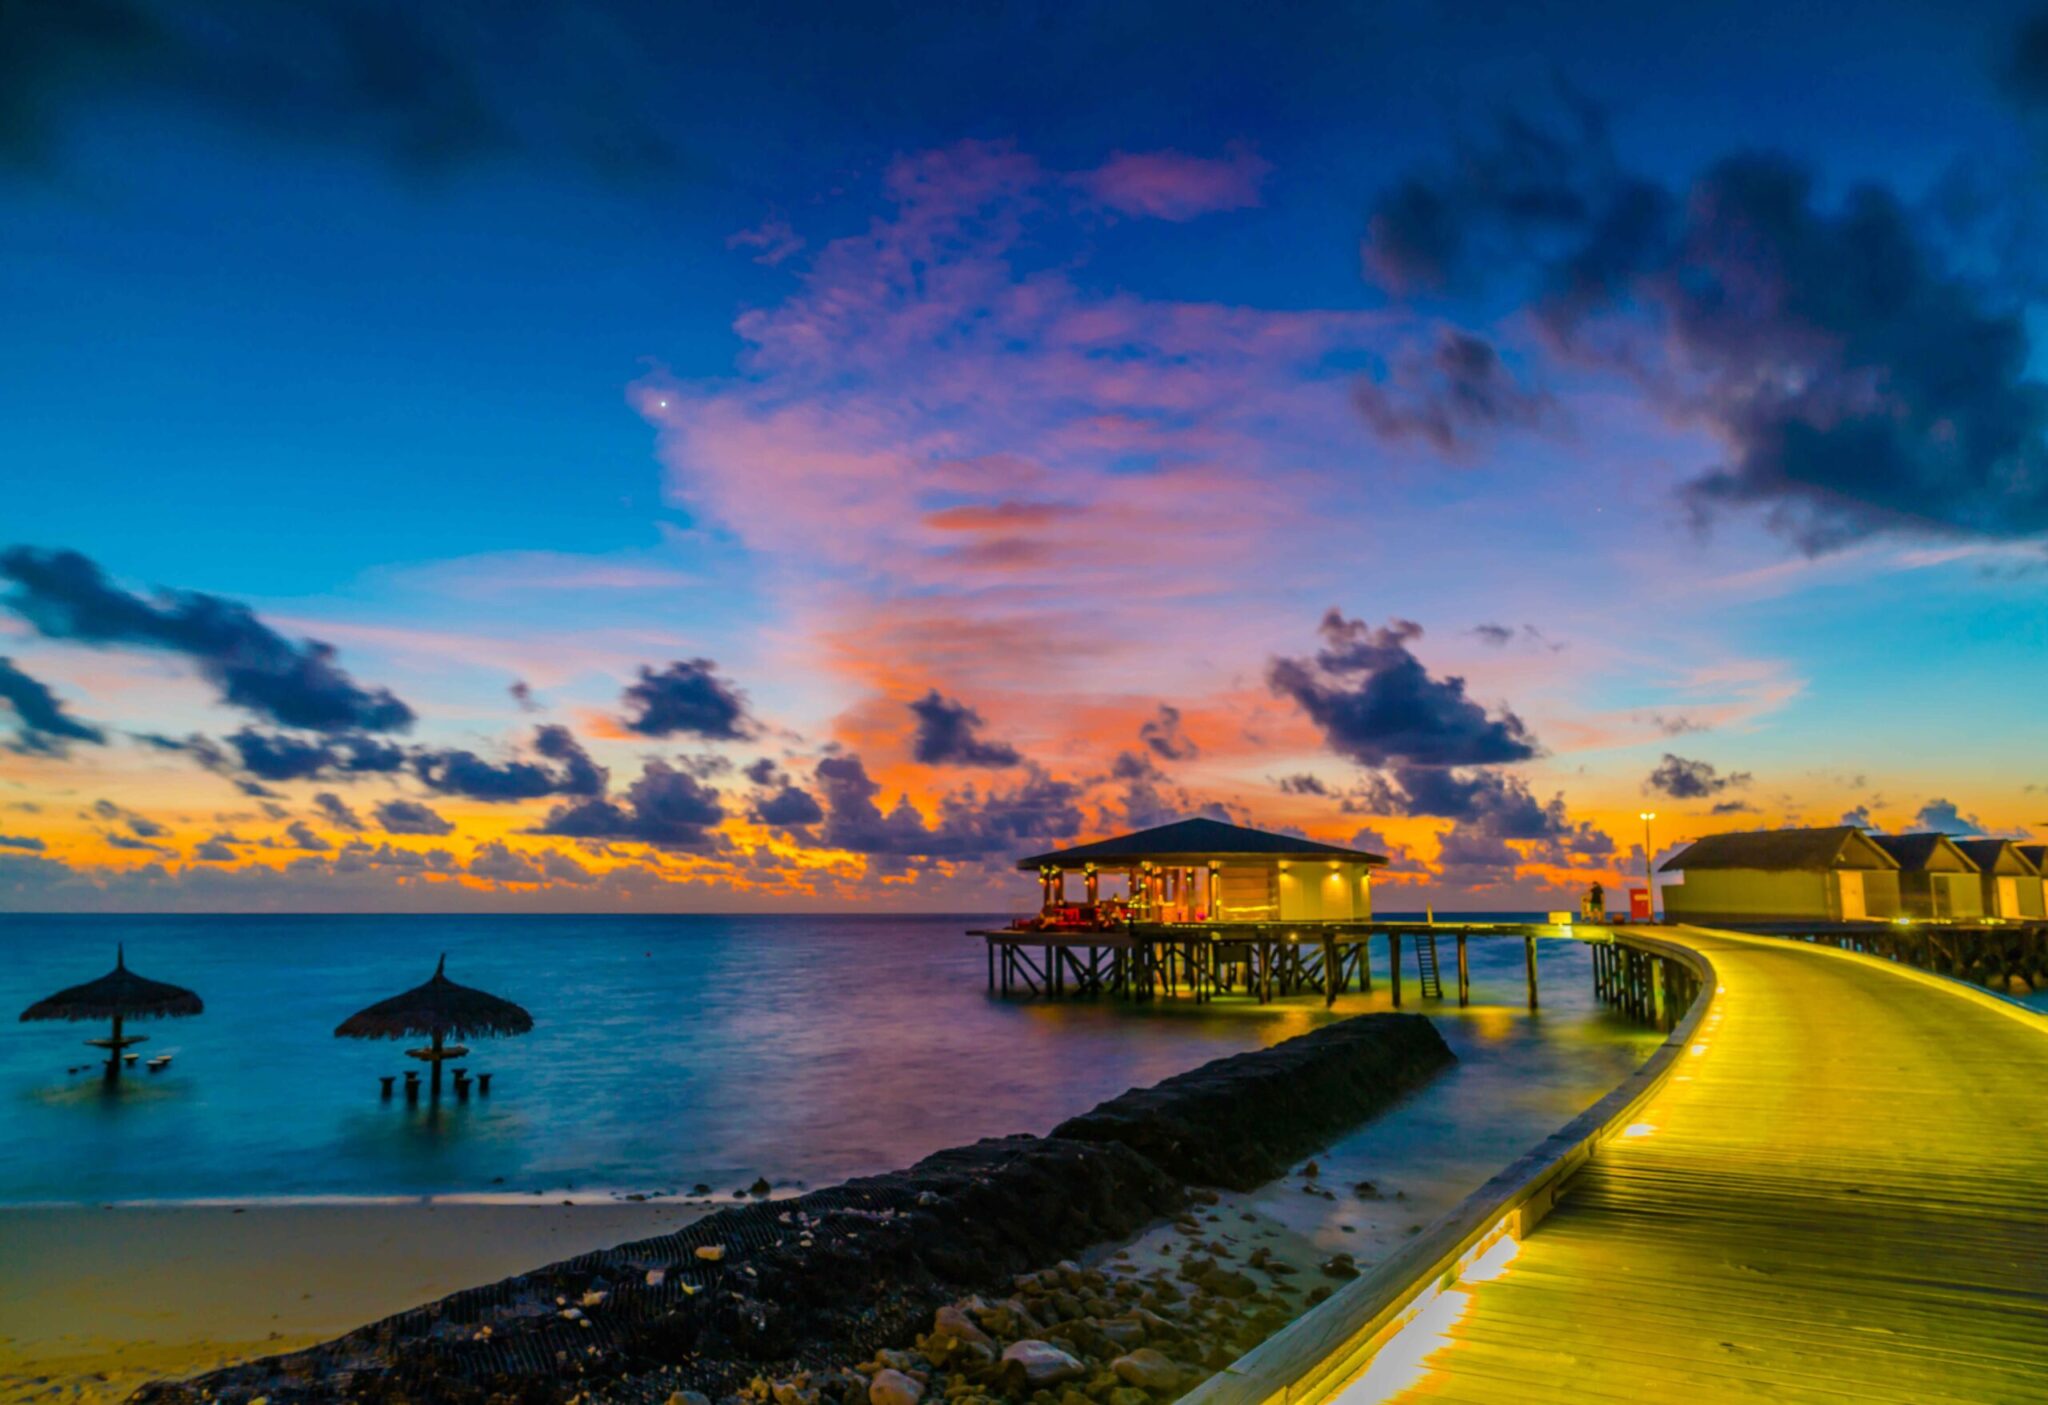 beautiful-water-villas-tropical-maldives-island-sunset-time